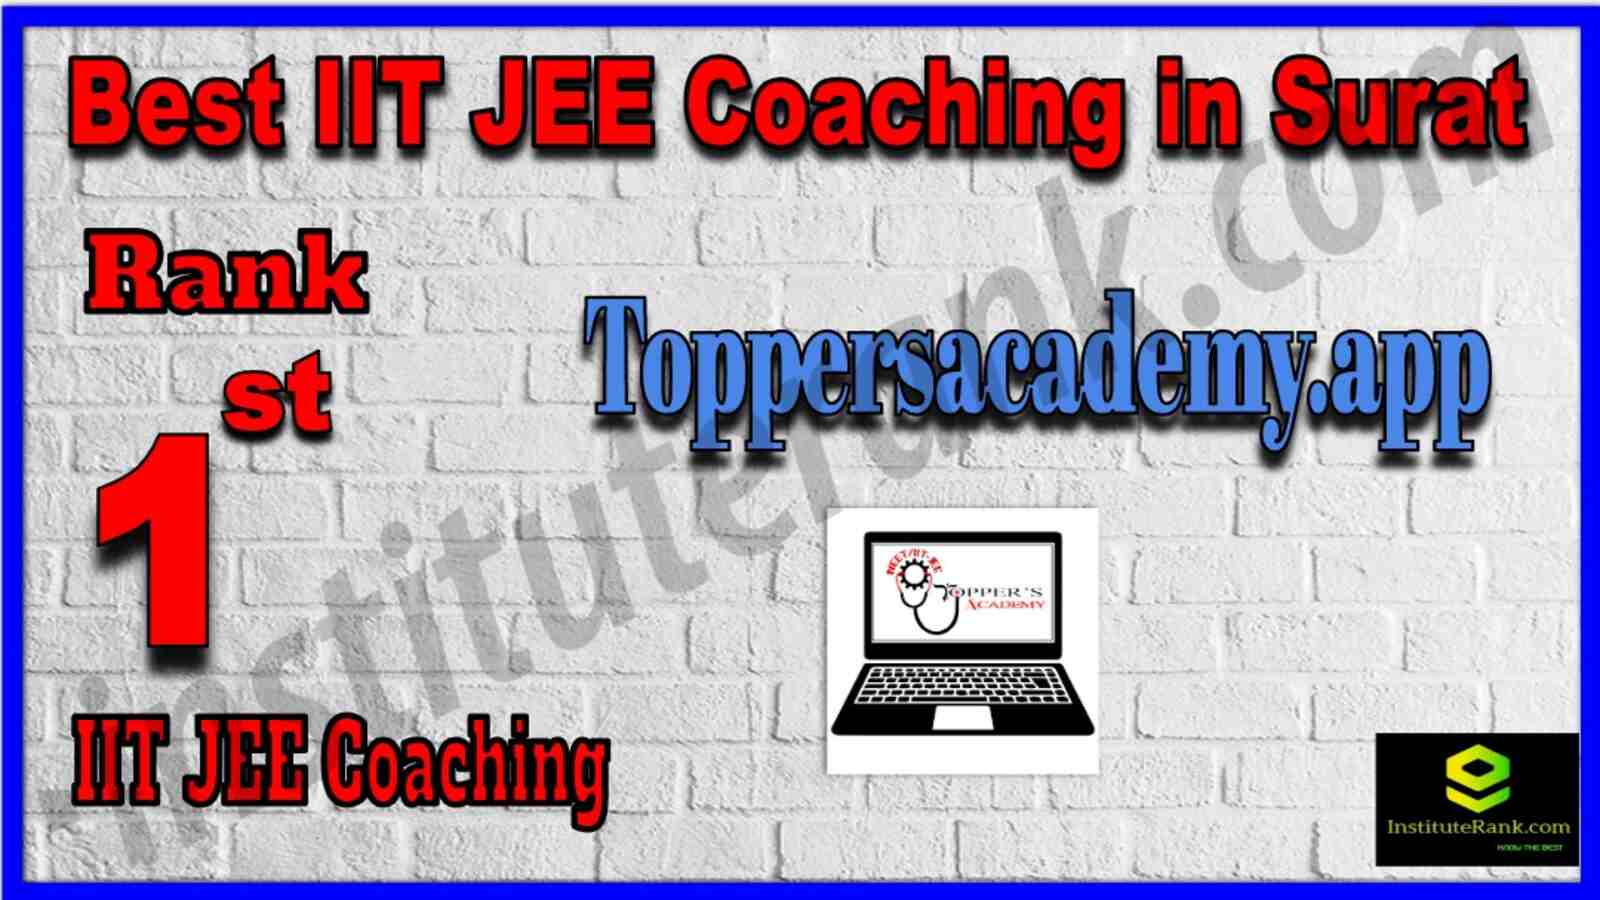 Rank 1 Best IIT JEE Coaching in Surat